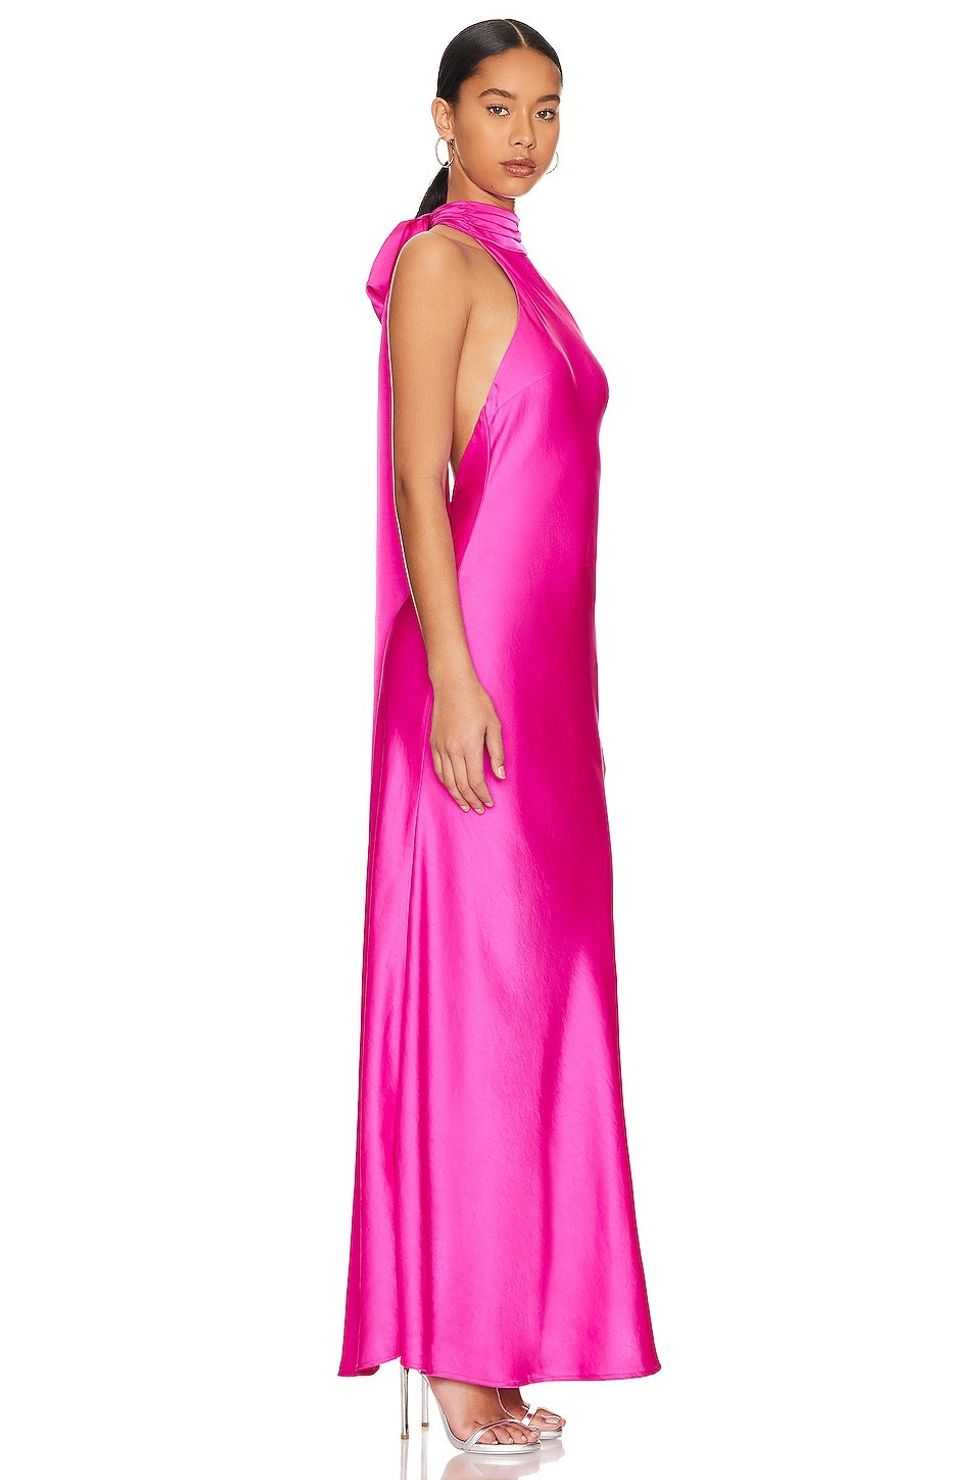 MISHA Evianna Satin Gown ($447)